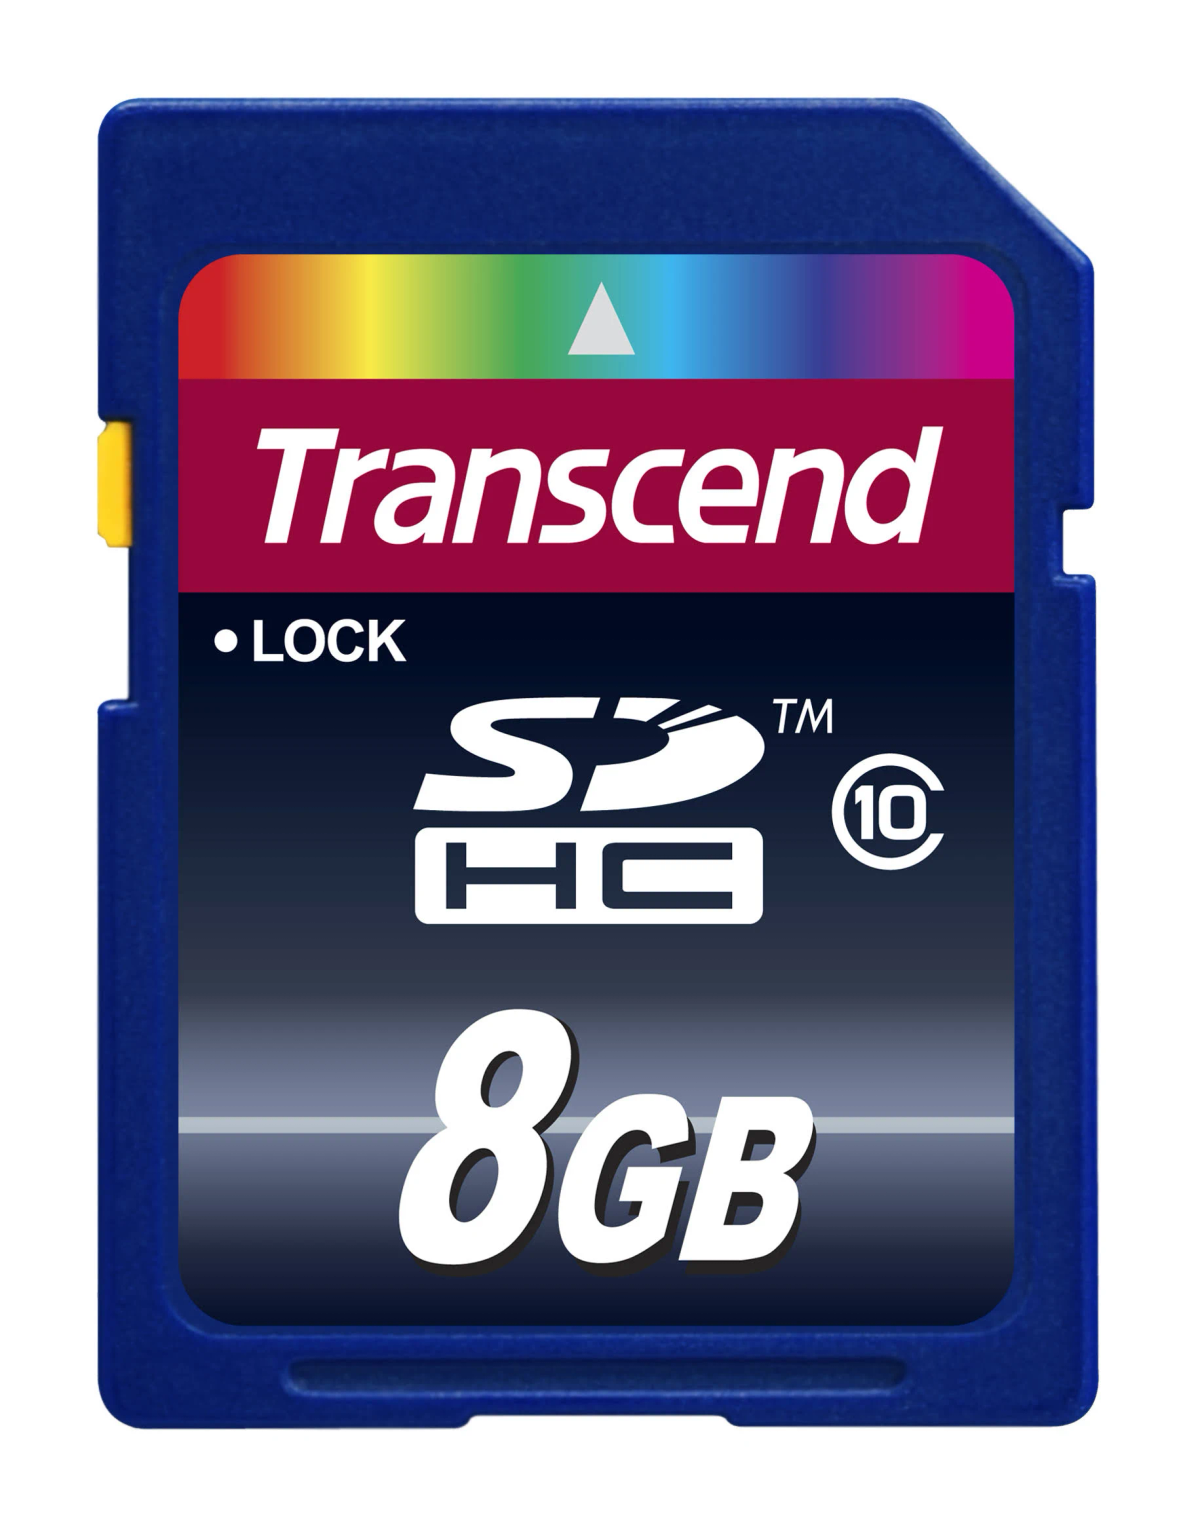 19 MB/s TRANSCEND GB, 8 SDHC, SD m0000B2L7Y, Speicherkarte, Micro-SDHC,